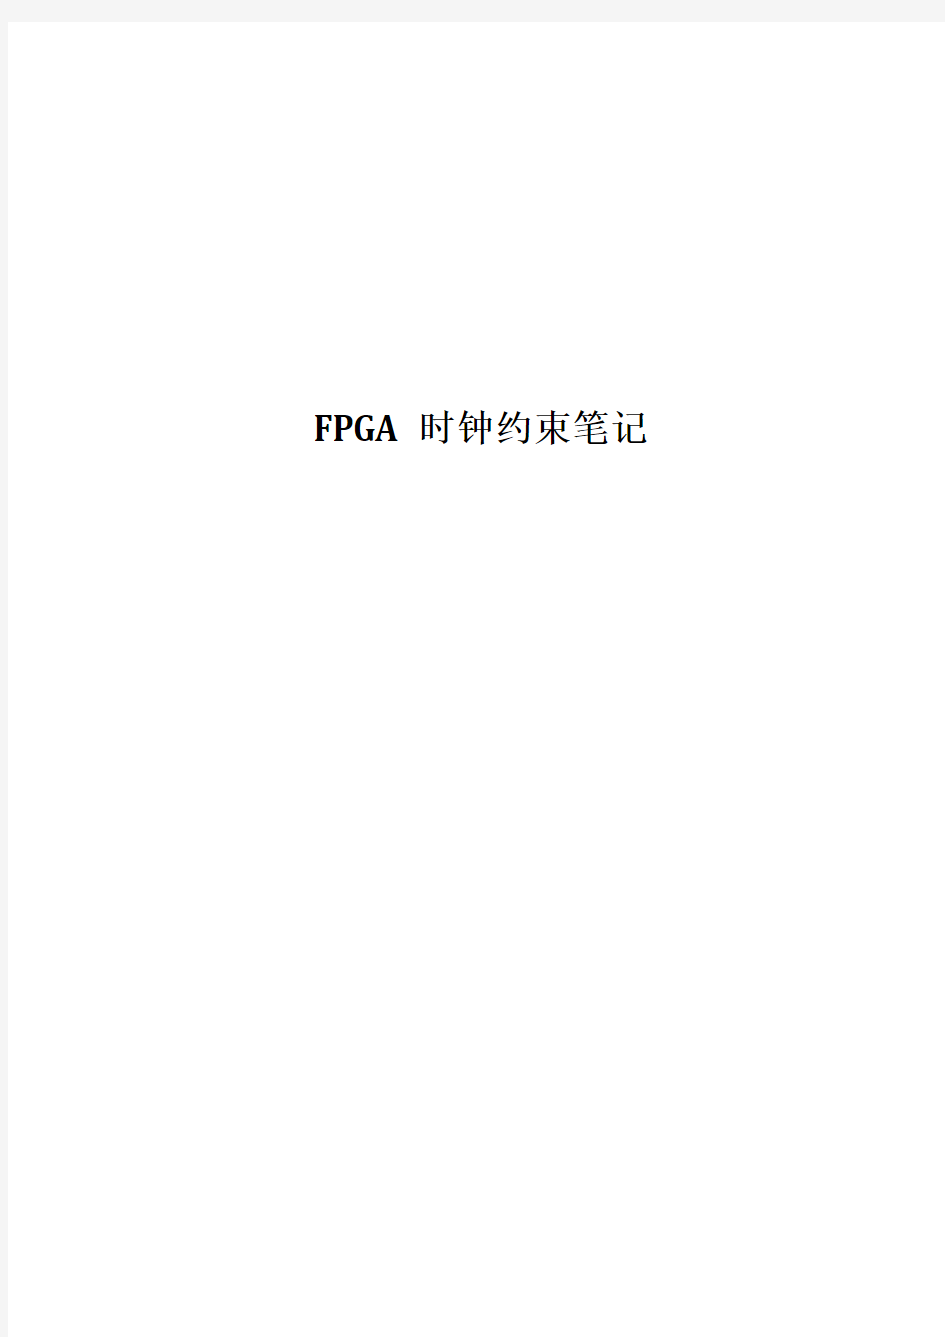 FPGA时序约束笔记